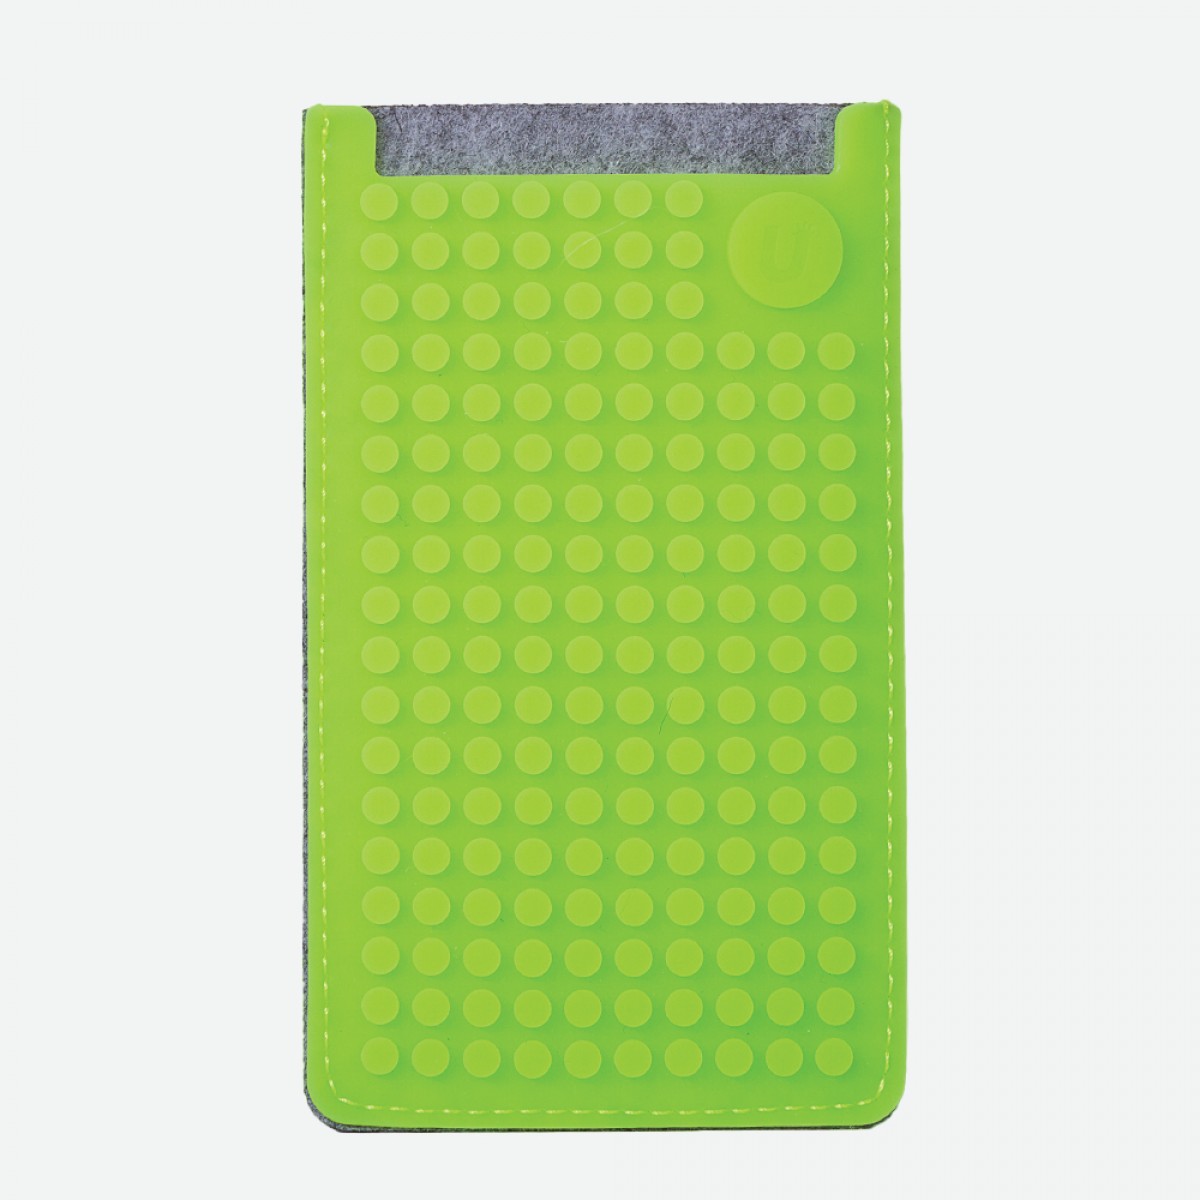 UPixel כיסוי פיקסלים קטן לטלפון - ירוק